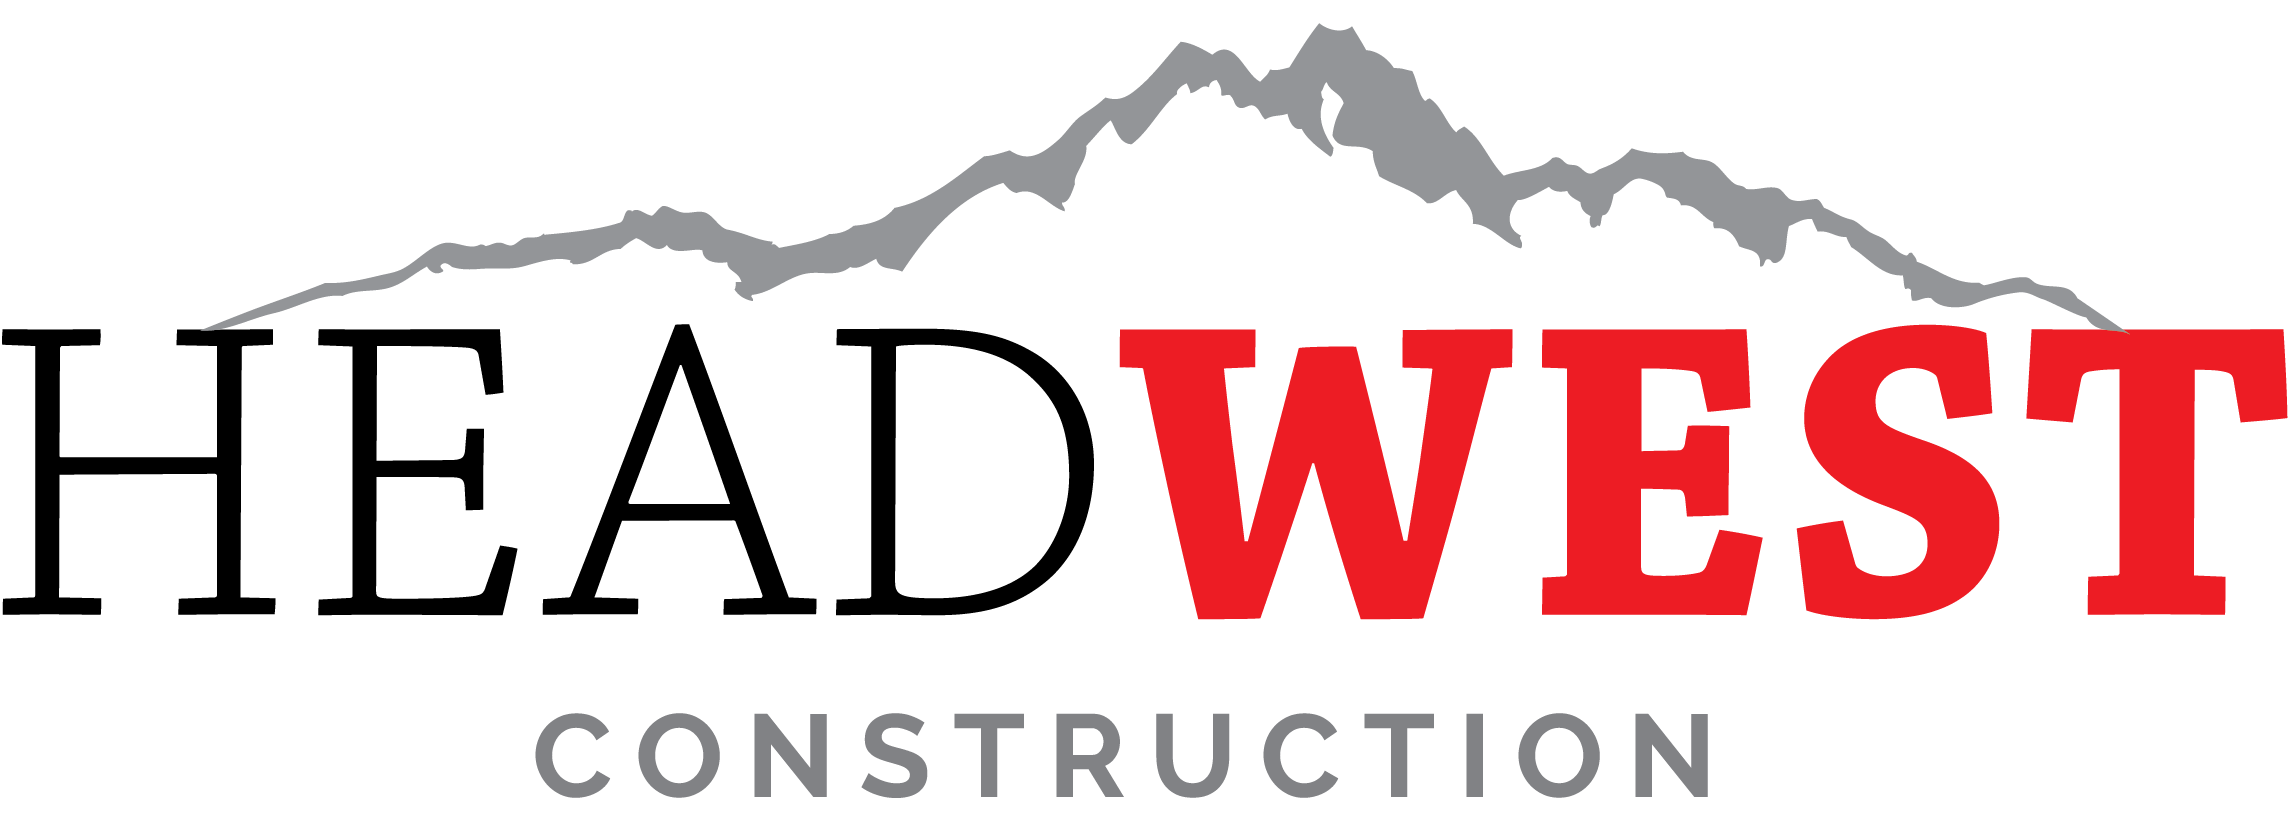 Head West Construction, LLC Logo